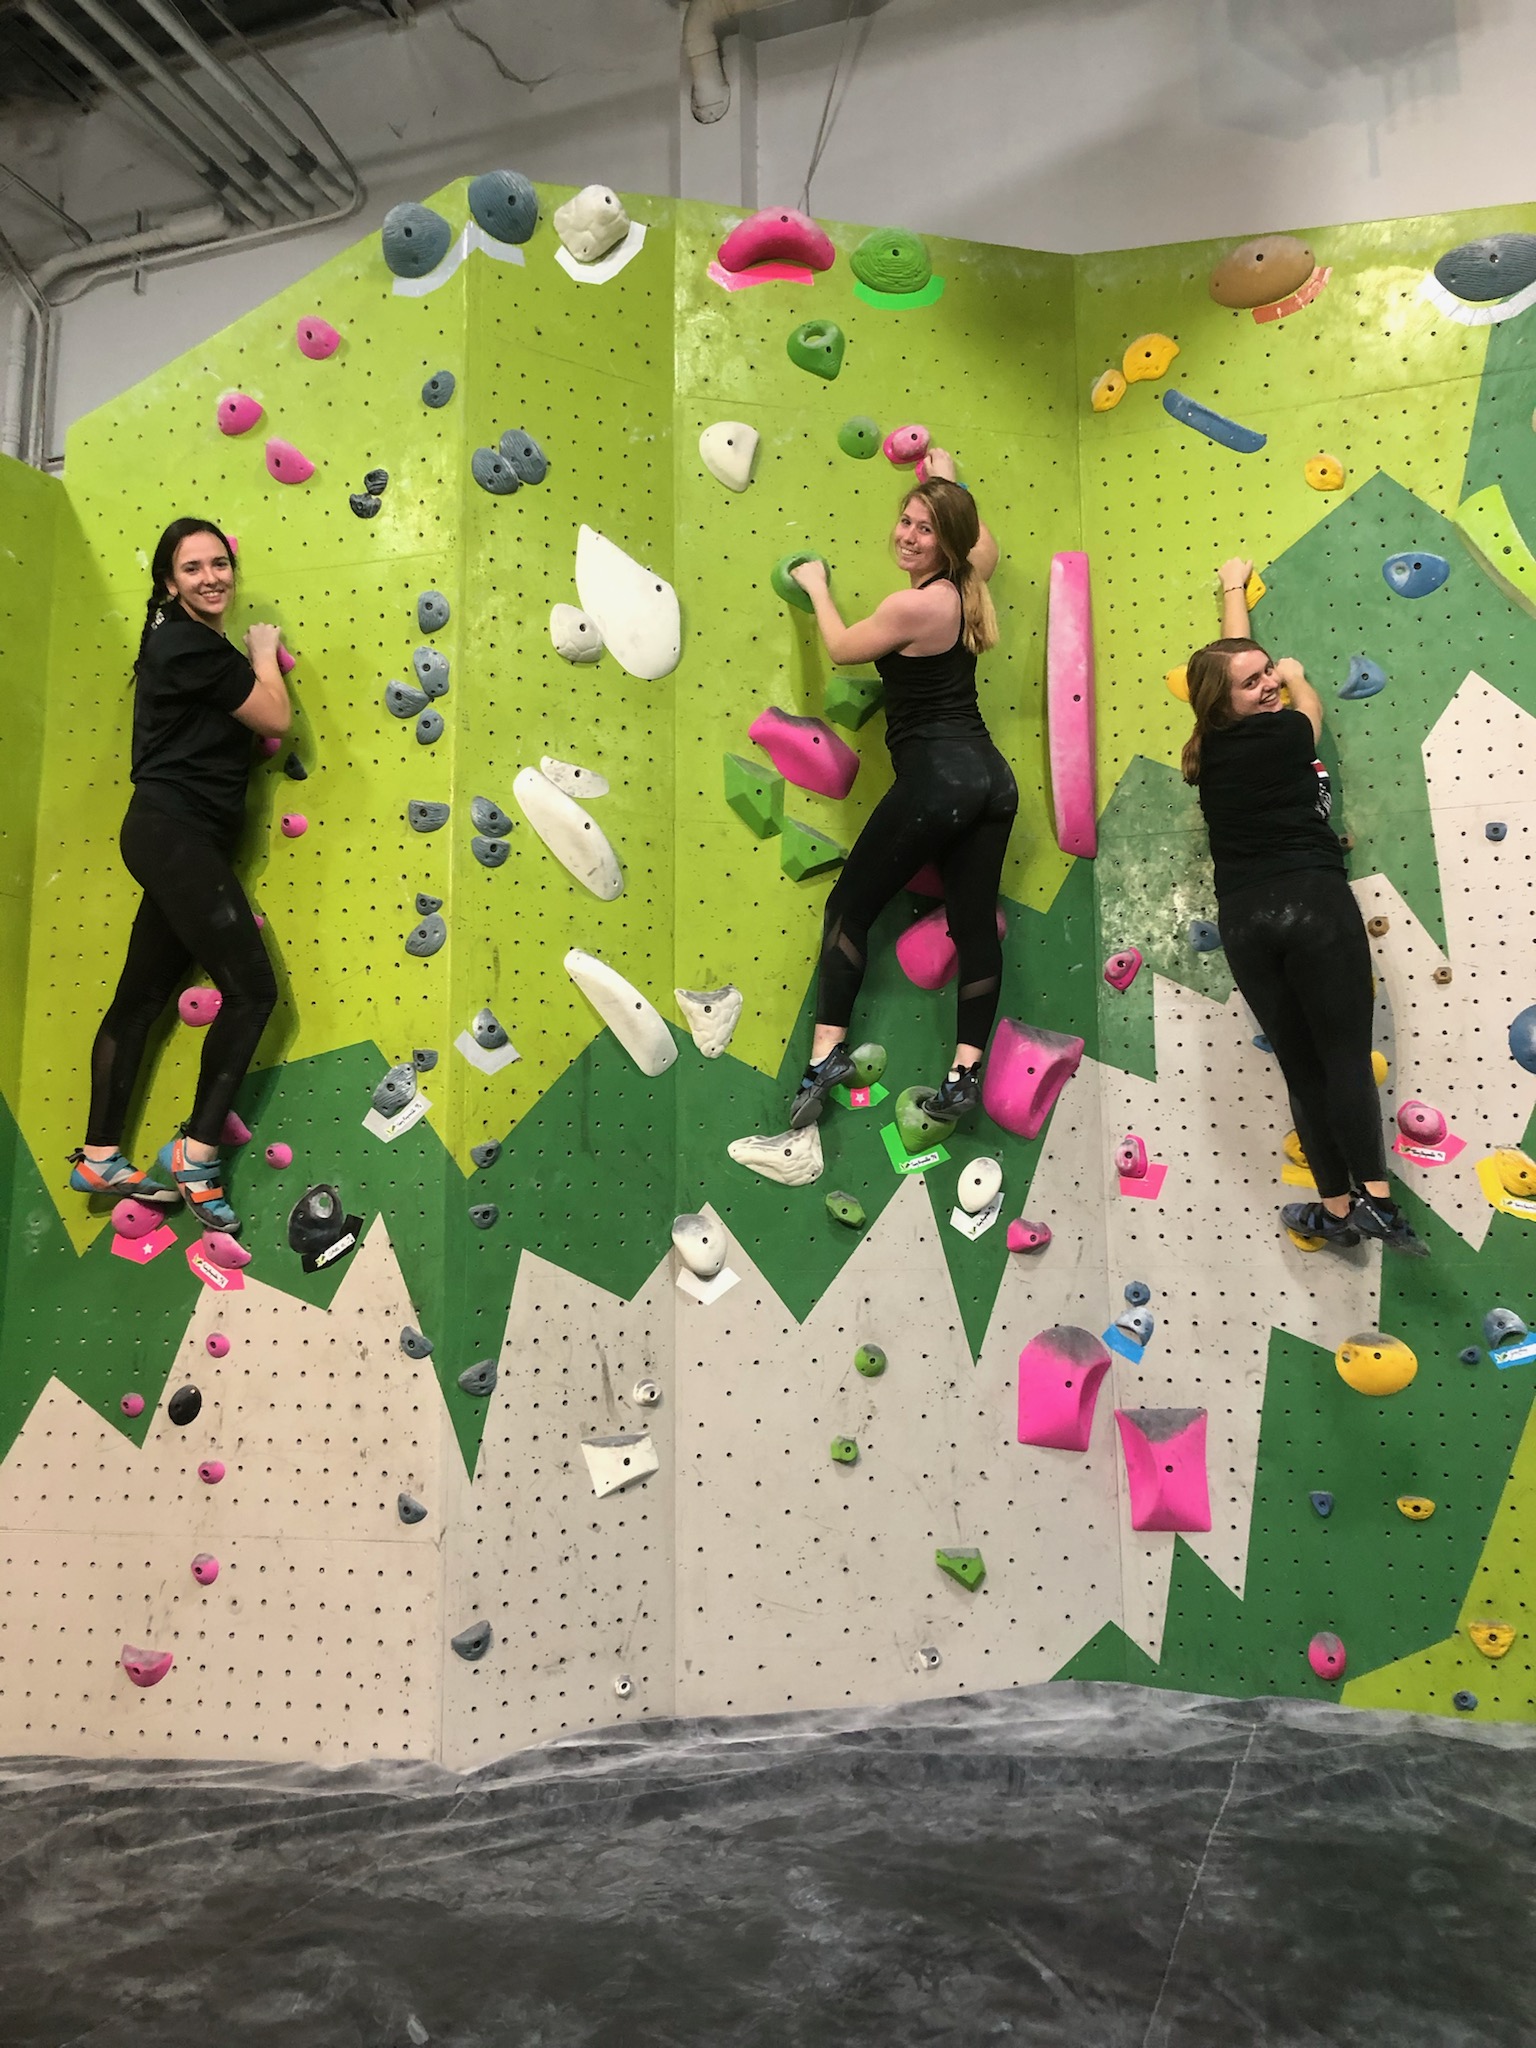 Christina climbing with friends